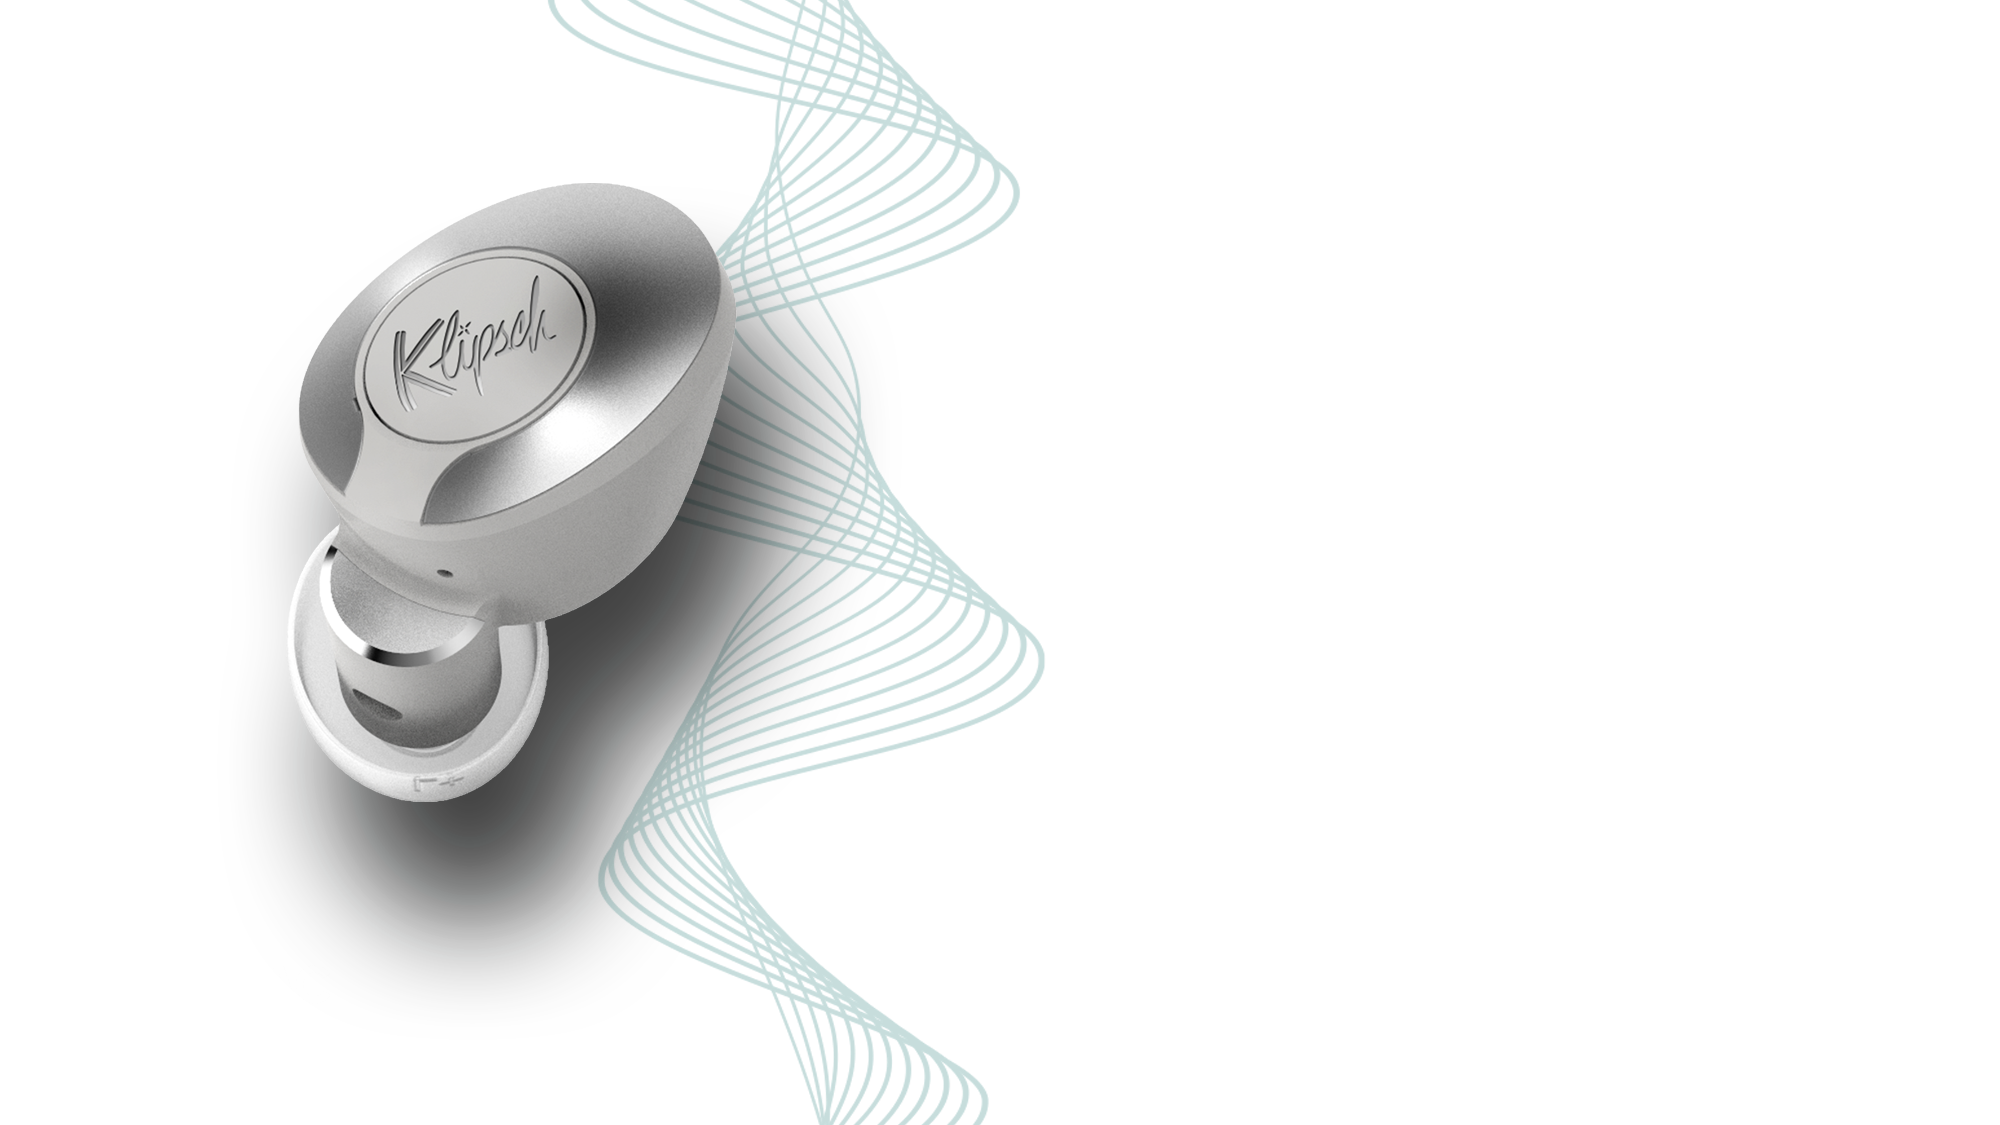 Klipsch T5 II True Wireless ANC earphone with an illustration of wavy lines and a Dirac logo Dektop